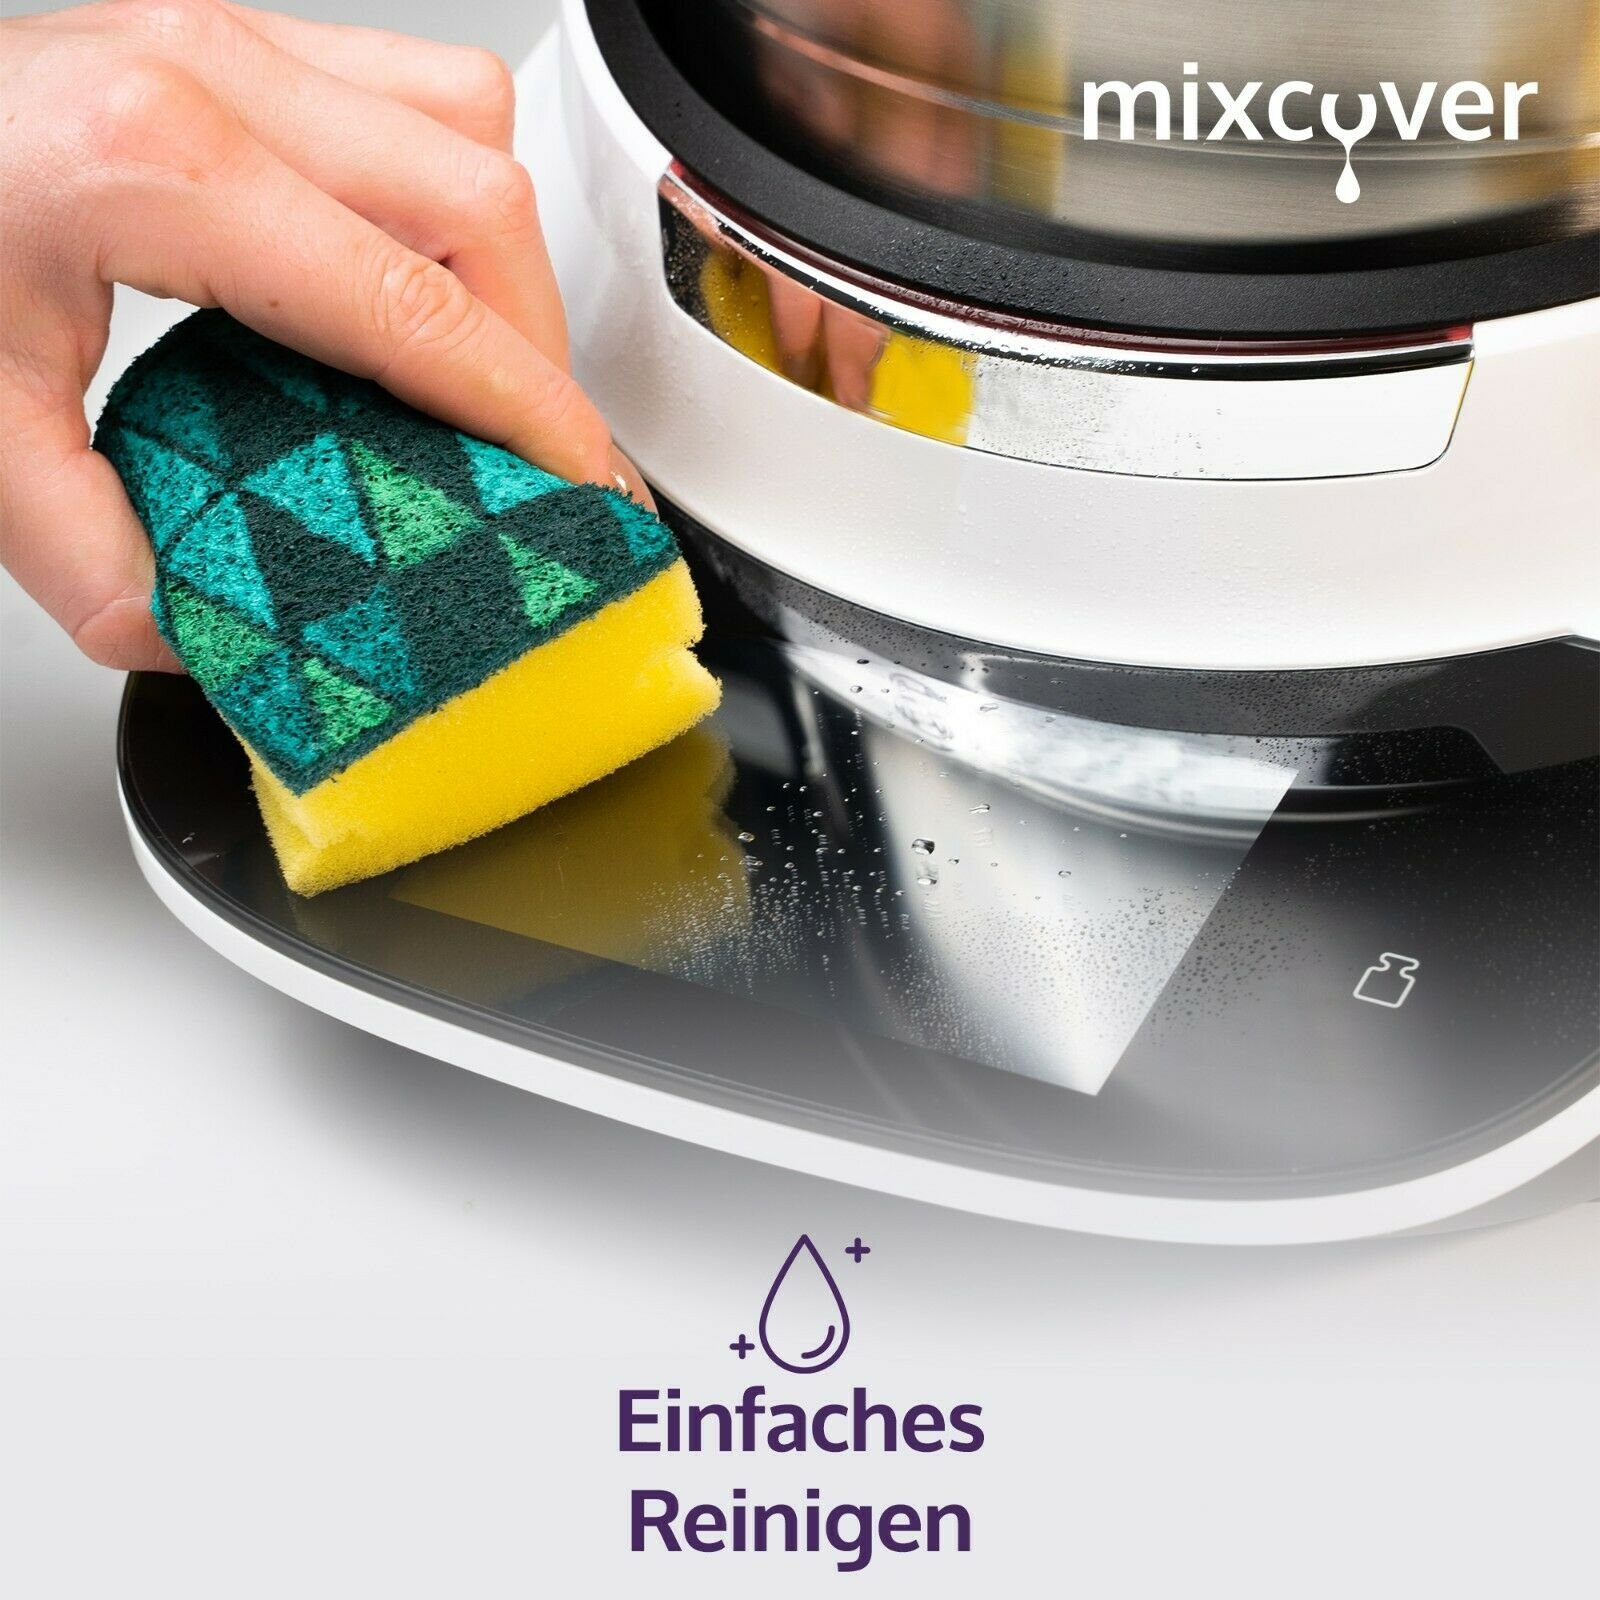 Mixcover Küchenmaschinen-Adapter für Bosch mixcover Schutzglas Displayschutz Schutzfolie Cookit Screenprotector